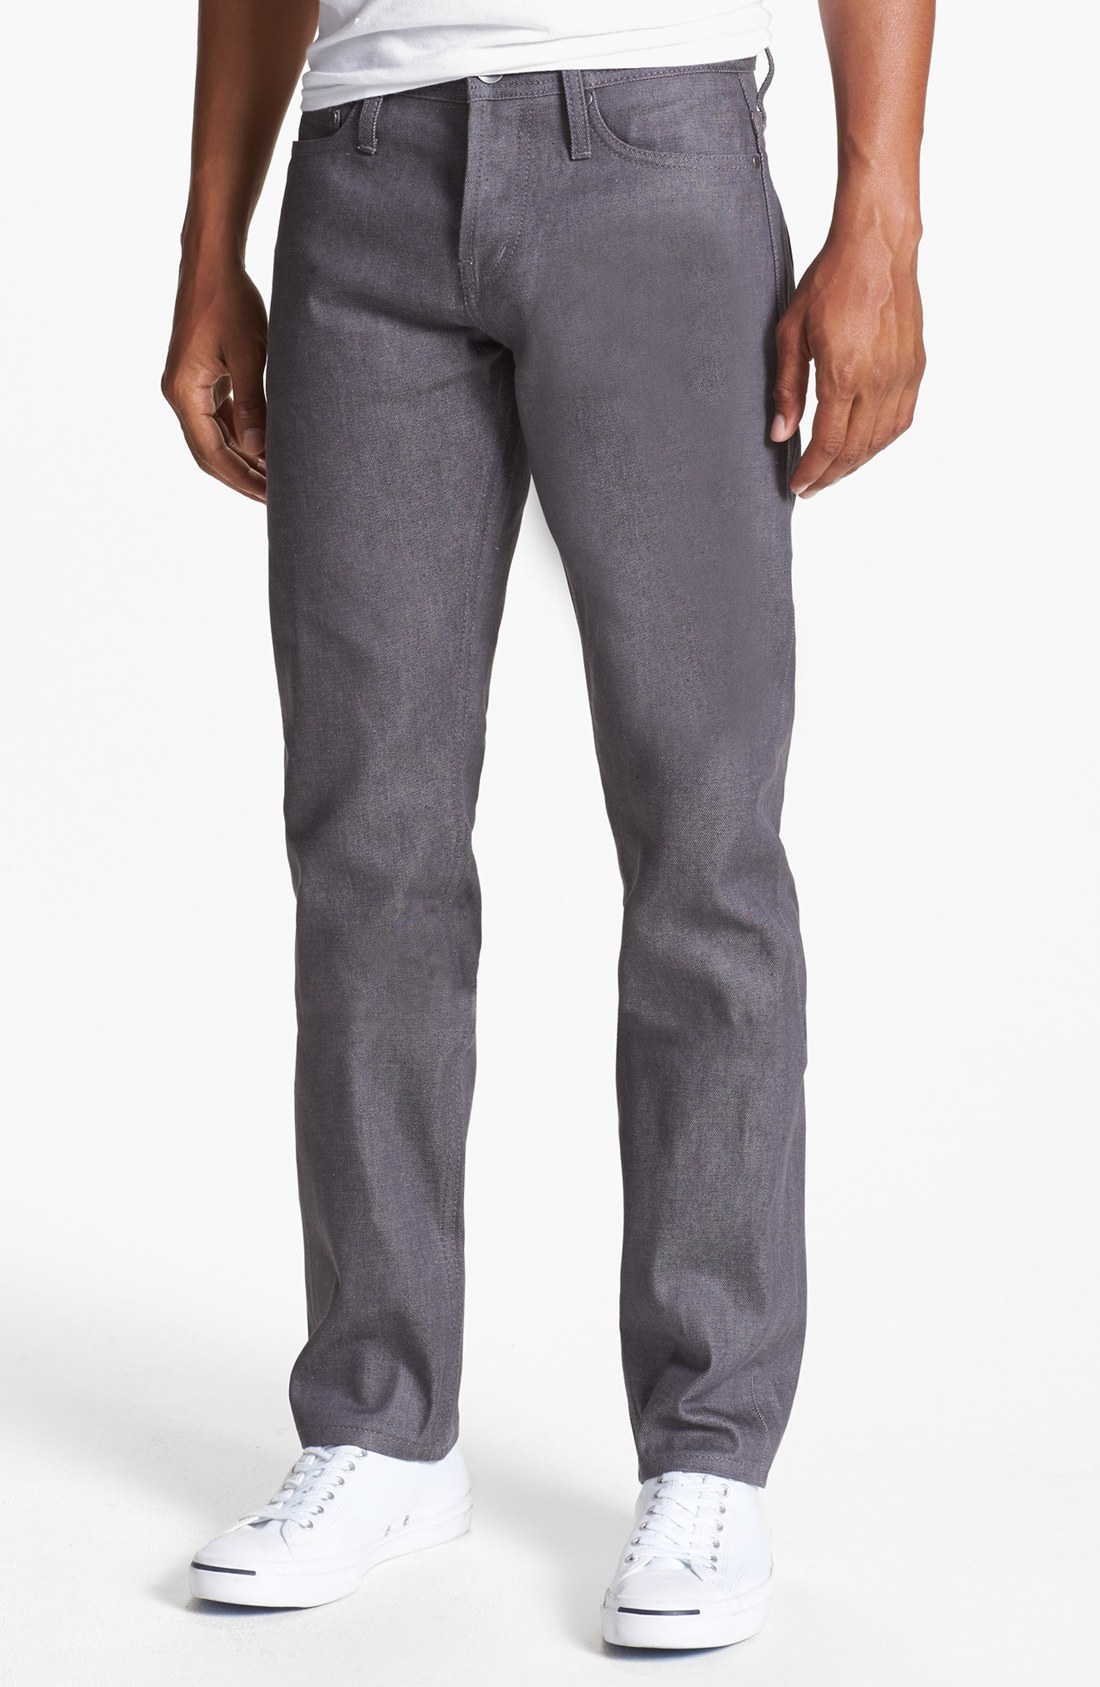 Unbranded The Unbranded Brand Slim Tapered Leg Selvedge Jeans in Gray ...